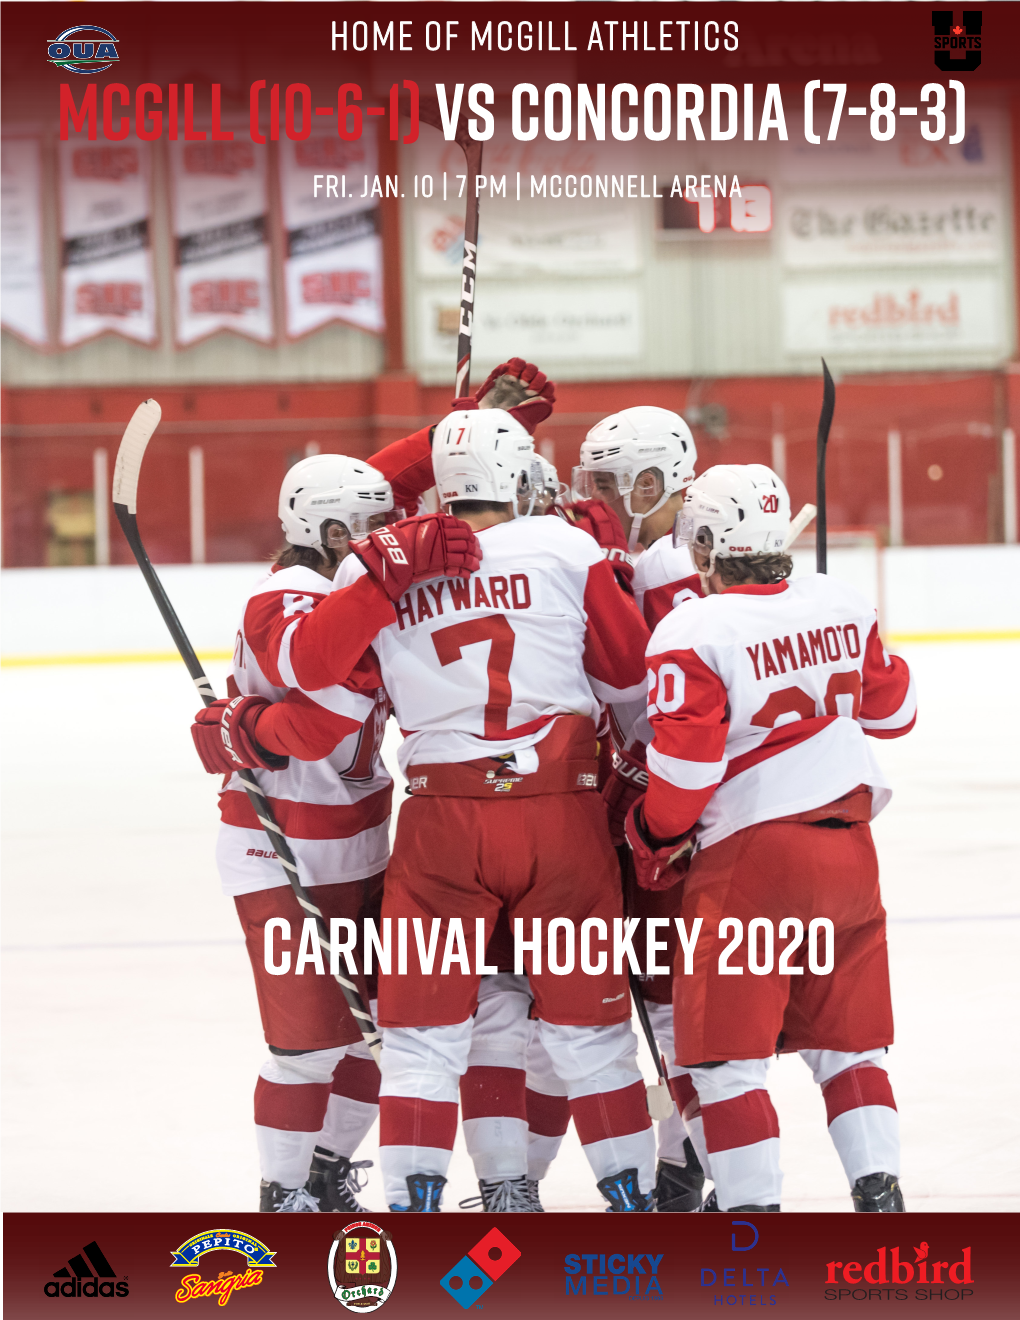 Mcgill (10-6-1) Vs Concordia (7-8-3) Carnival Hockey 2020